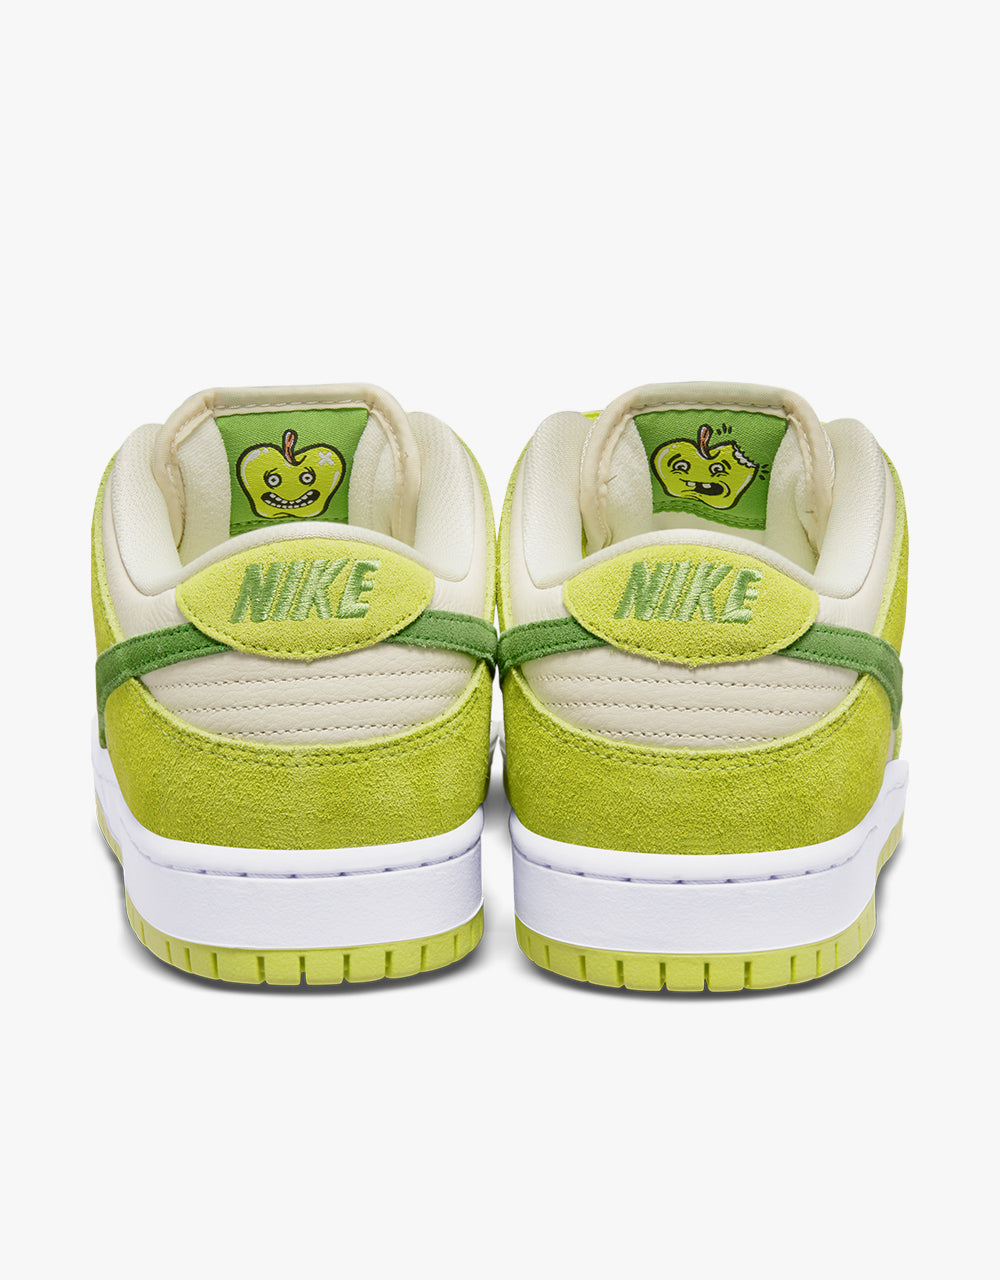 Nike SB 'Pit Stop Apple' Dunk Low Pro Skate Shoes